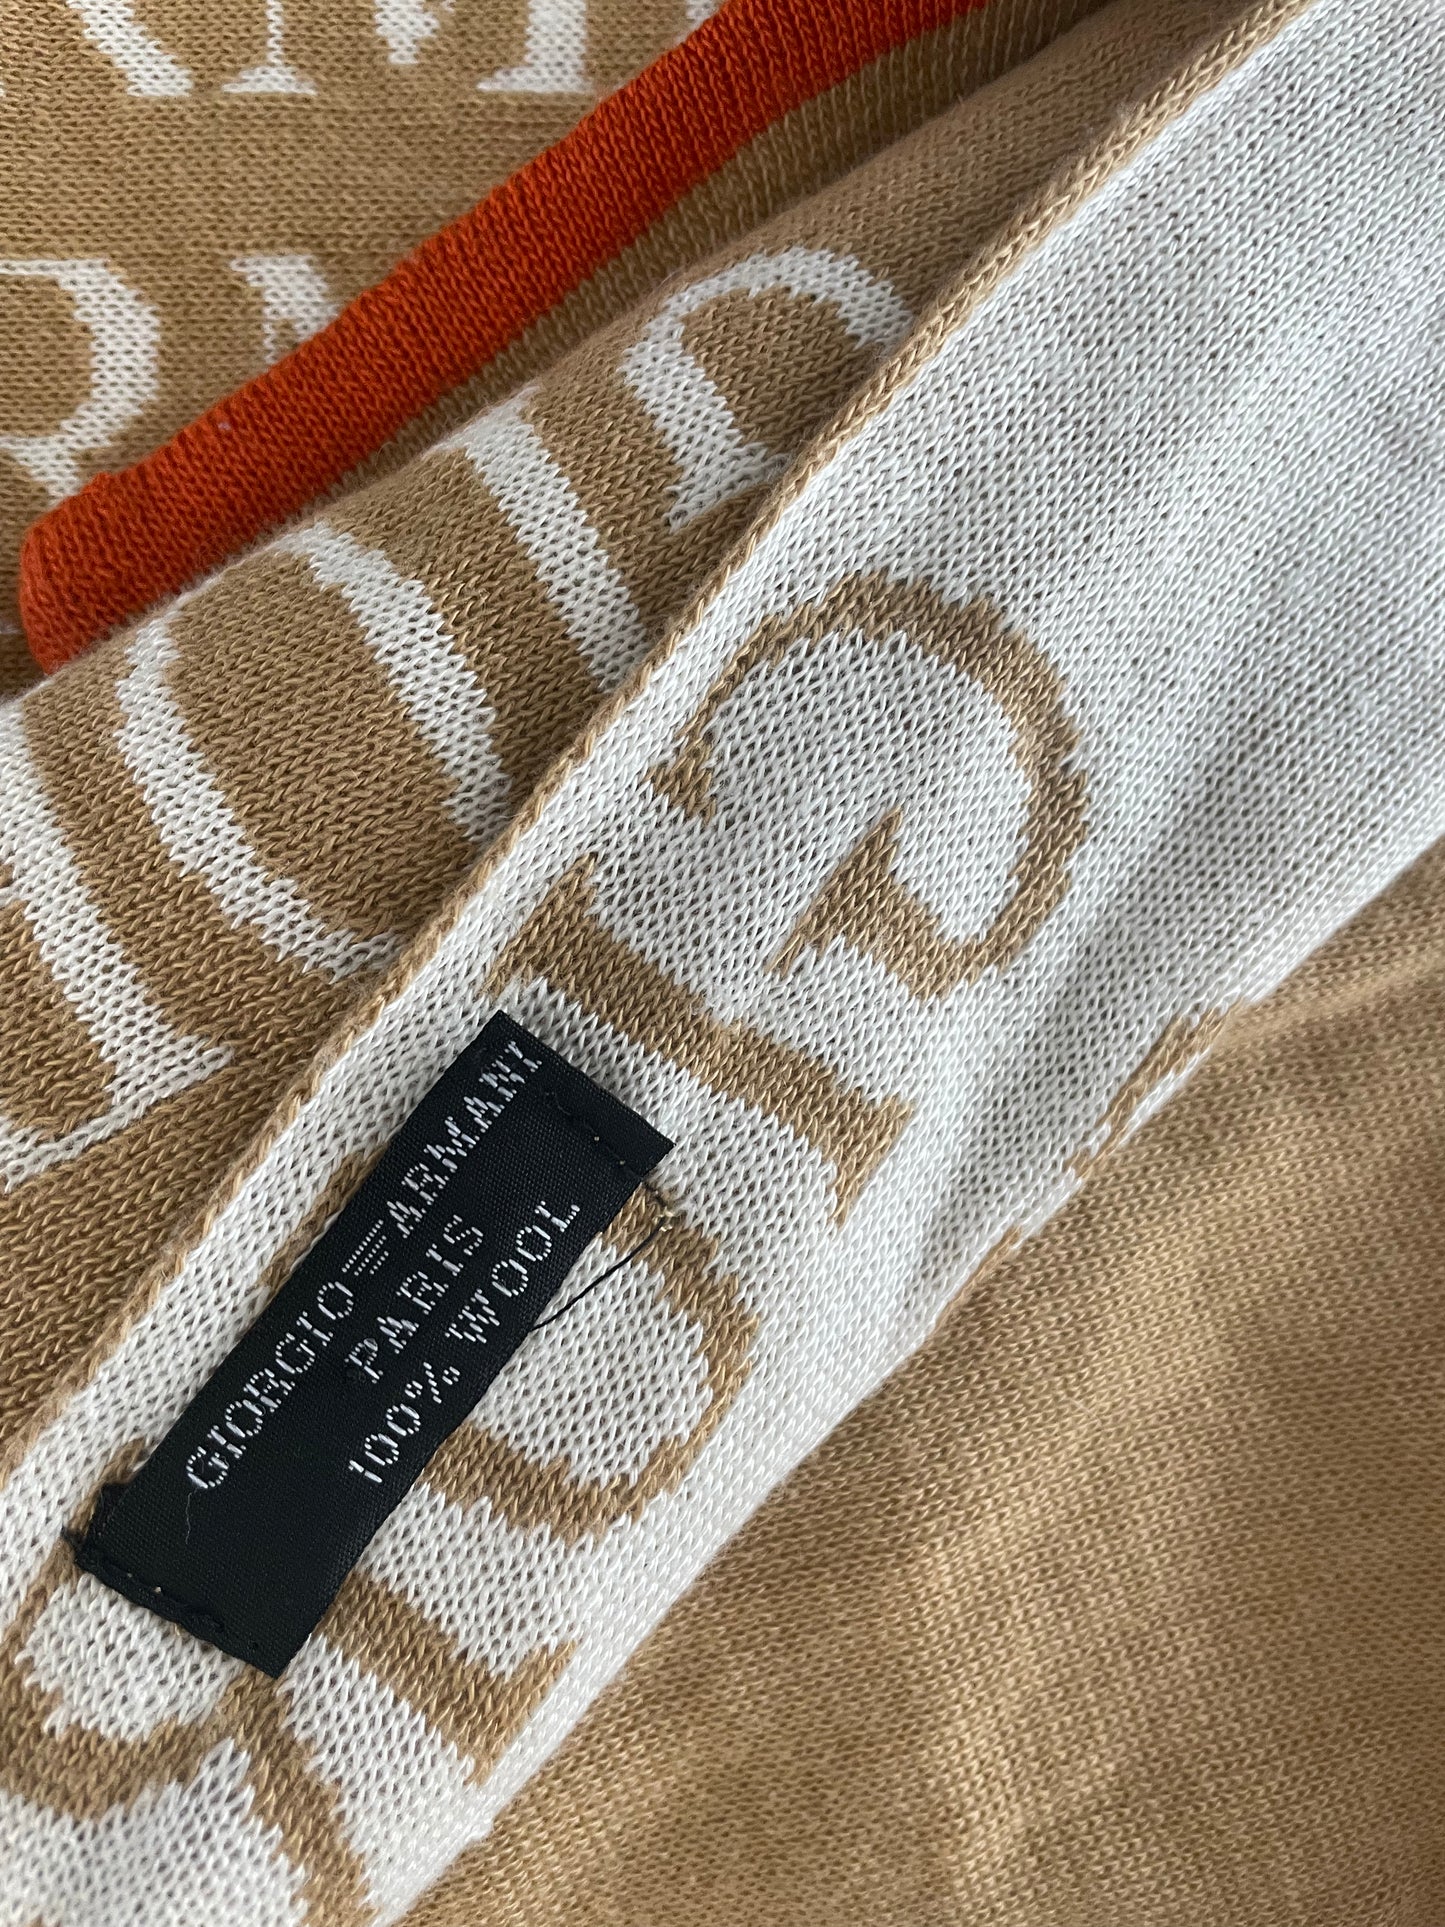 designer armani winter scarf 100% wool